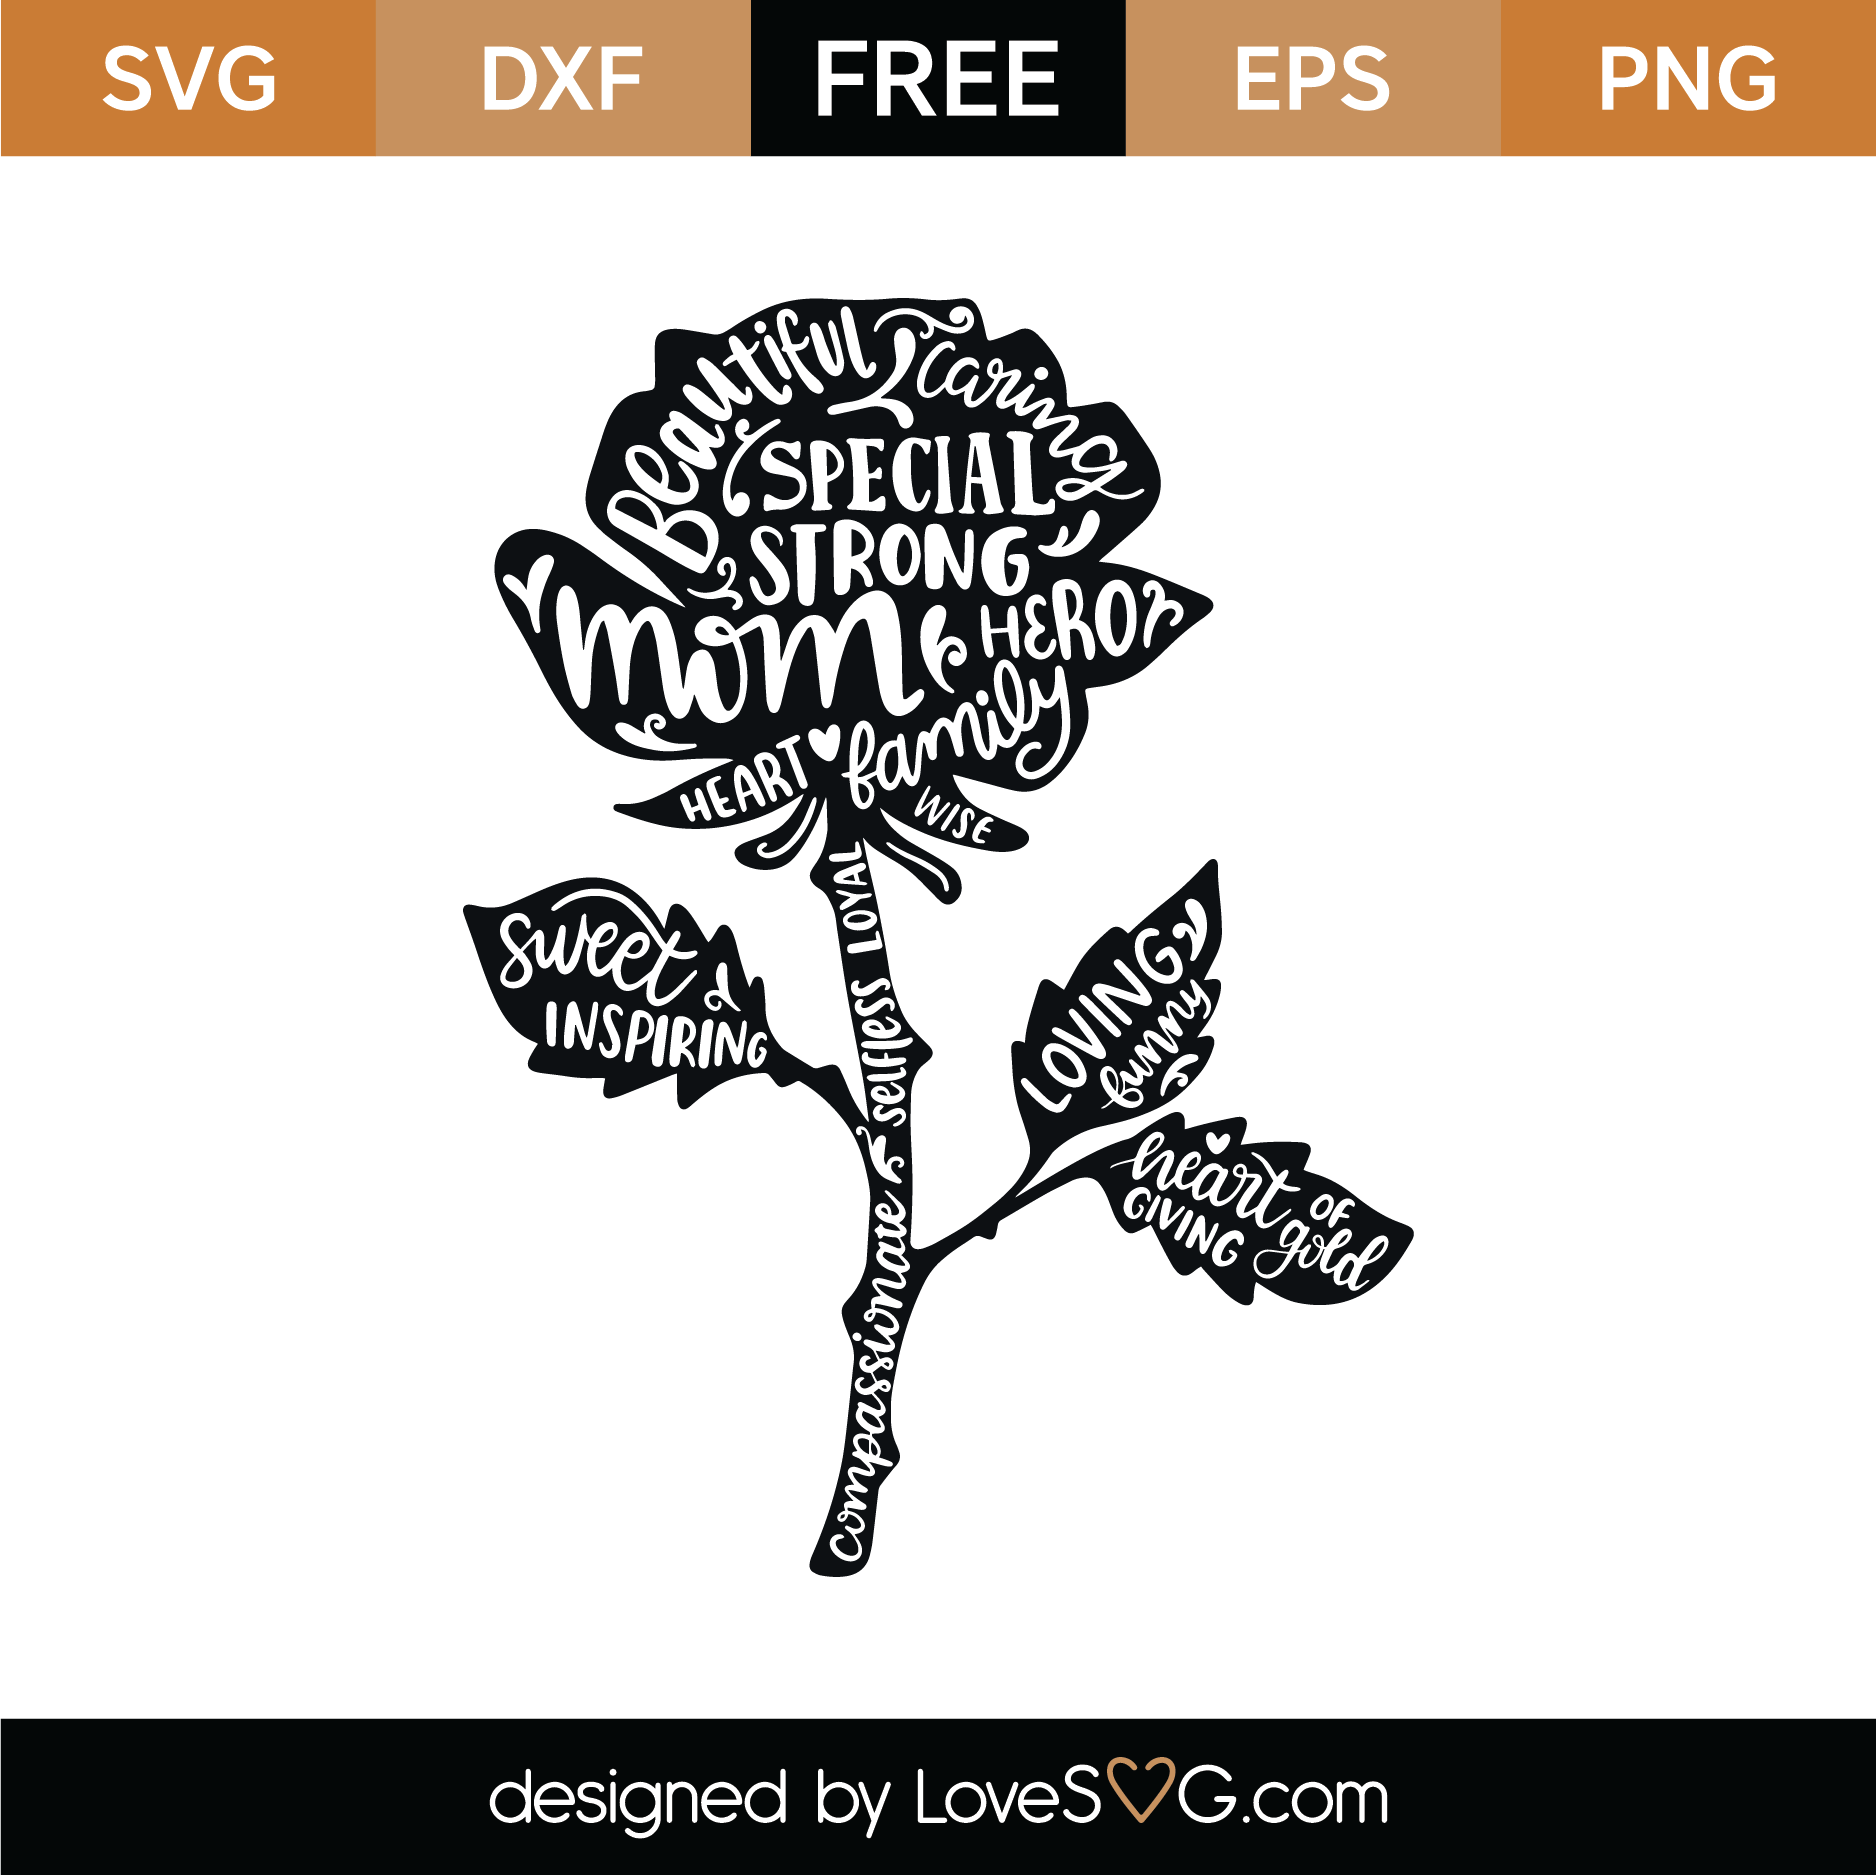 Download Free Rose With Words SVG Cut File | Lovesvg.com